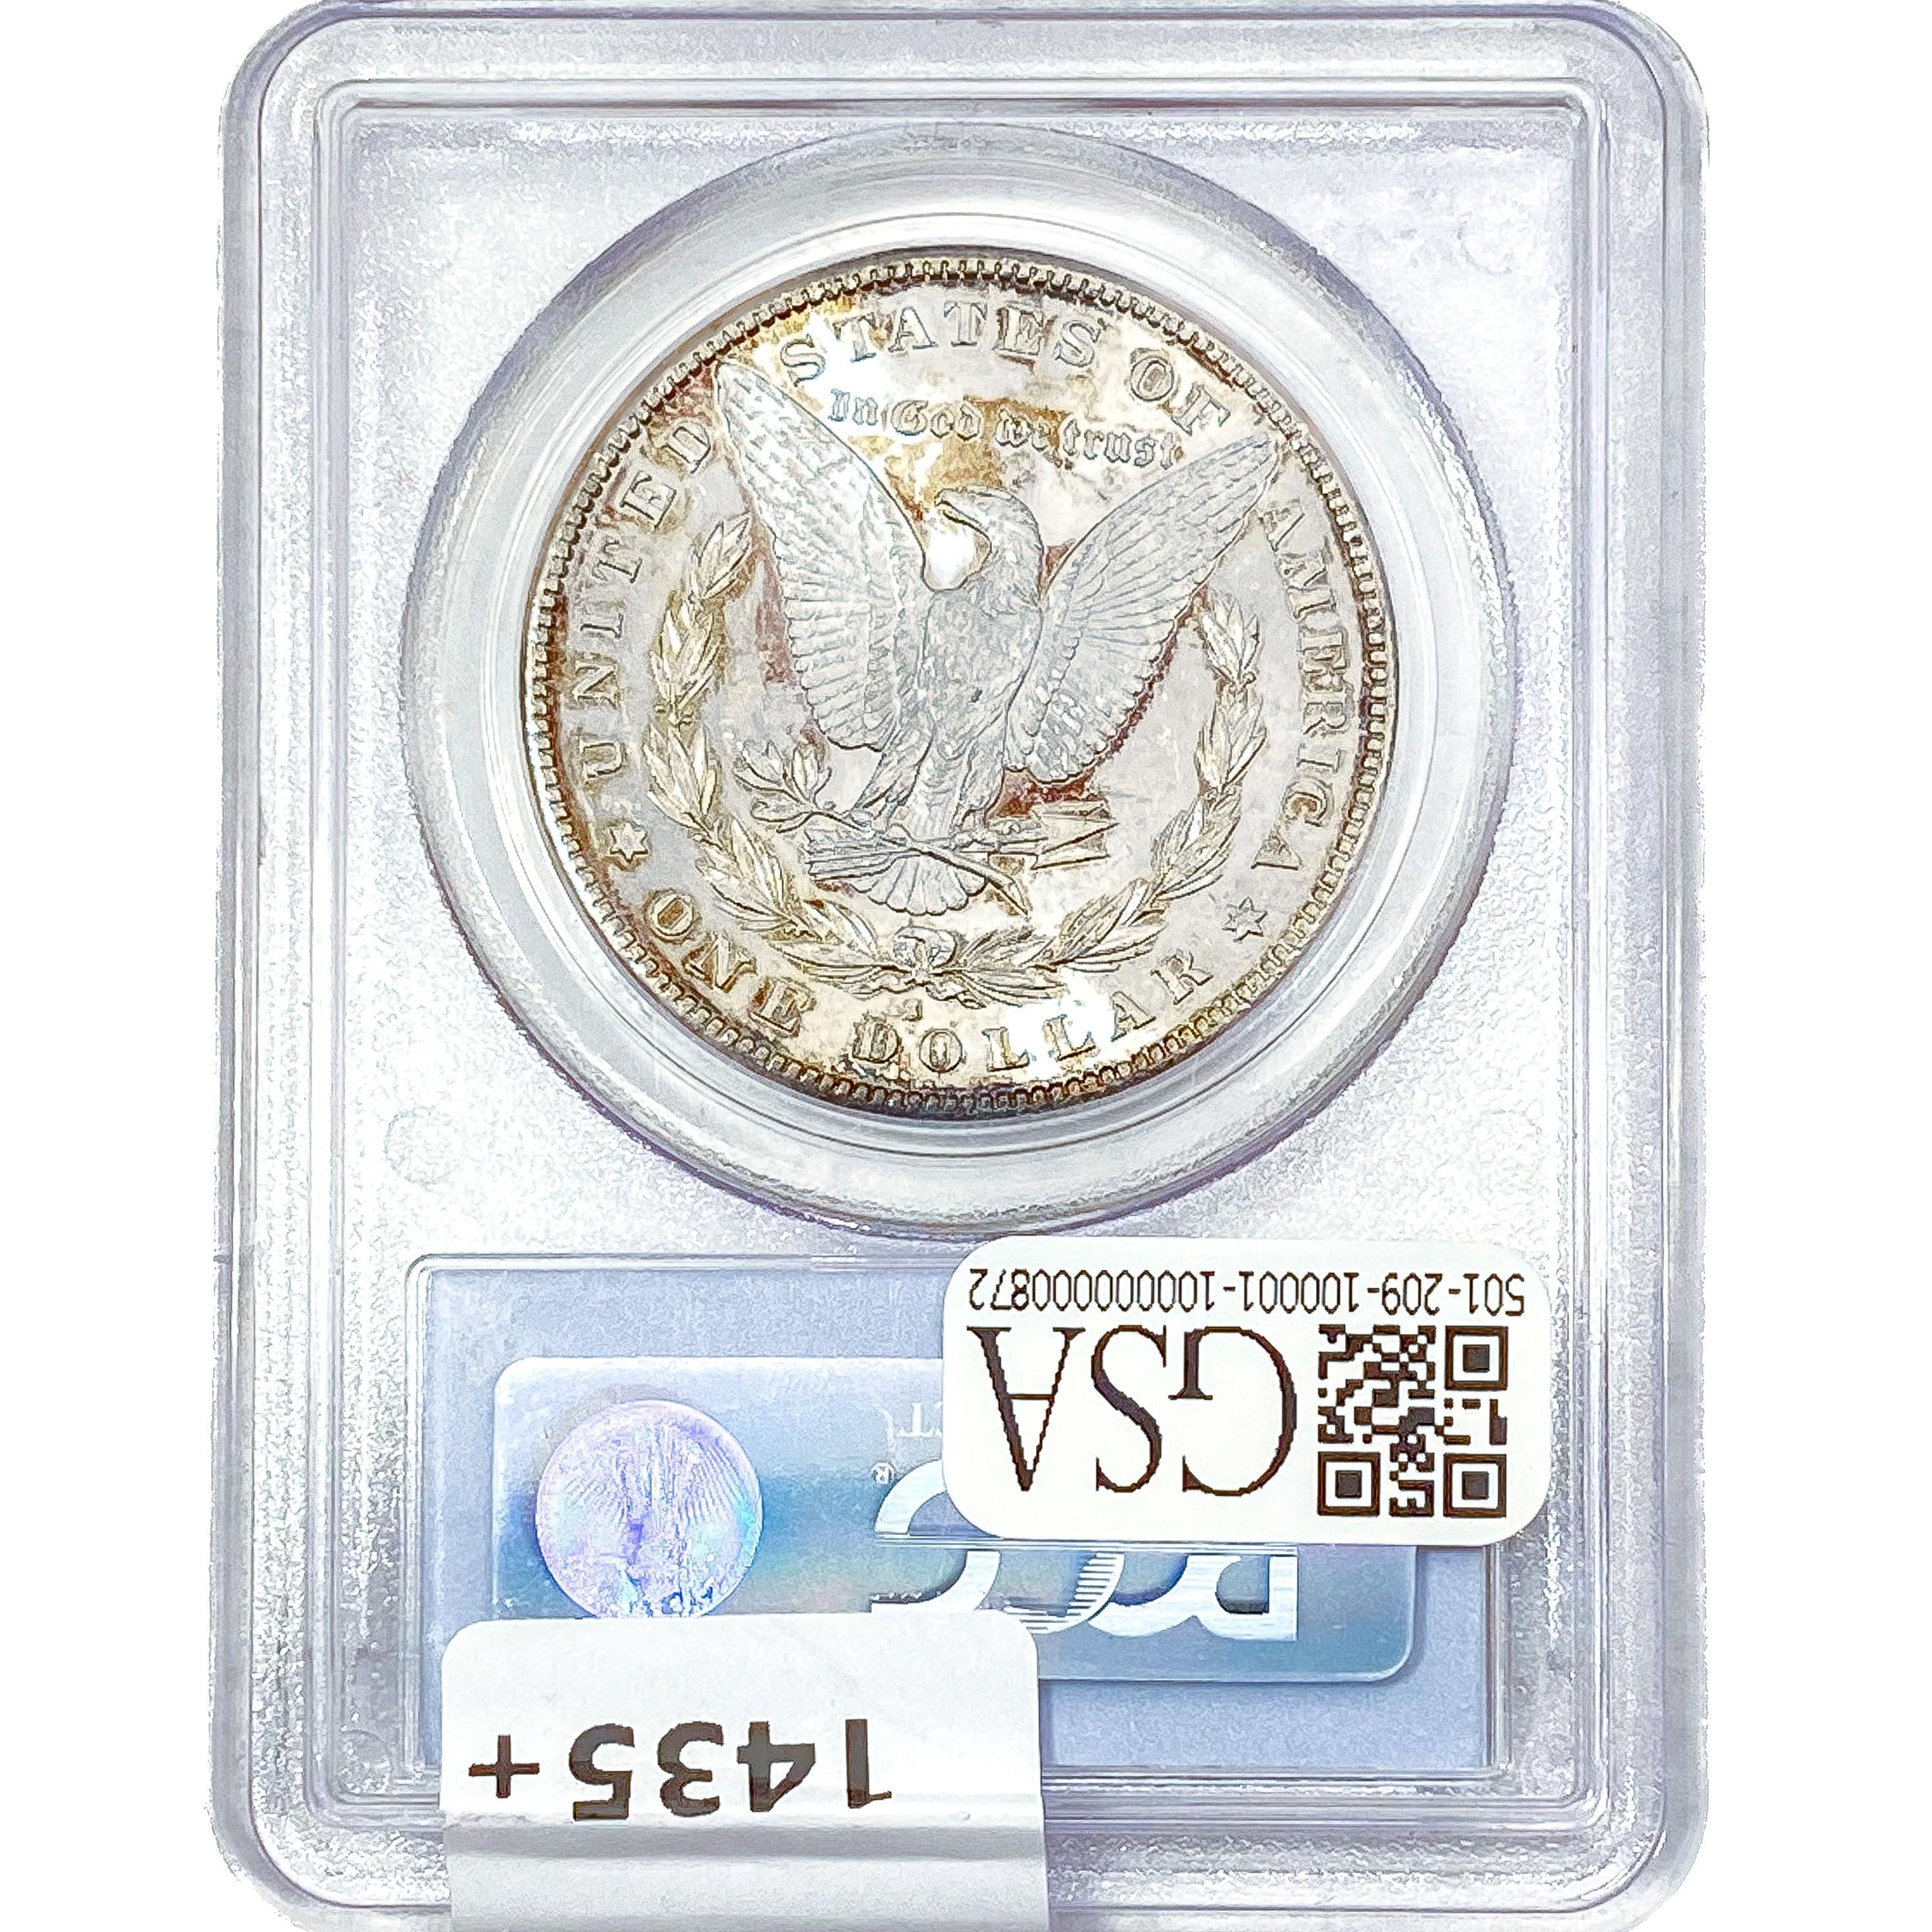 1883-S CAC Morgan Silver Dollar PCGS MS62